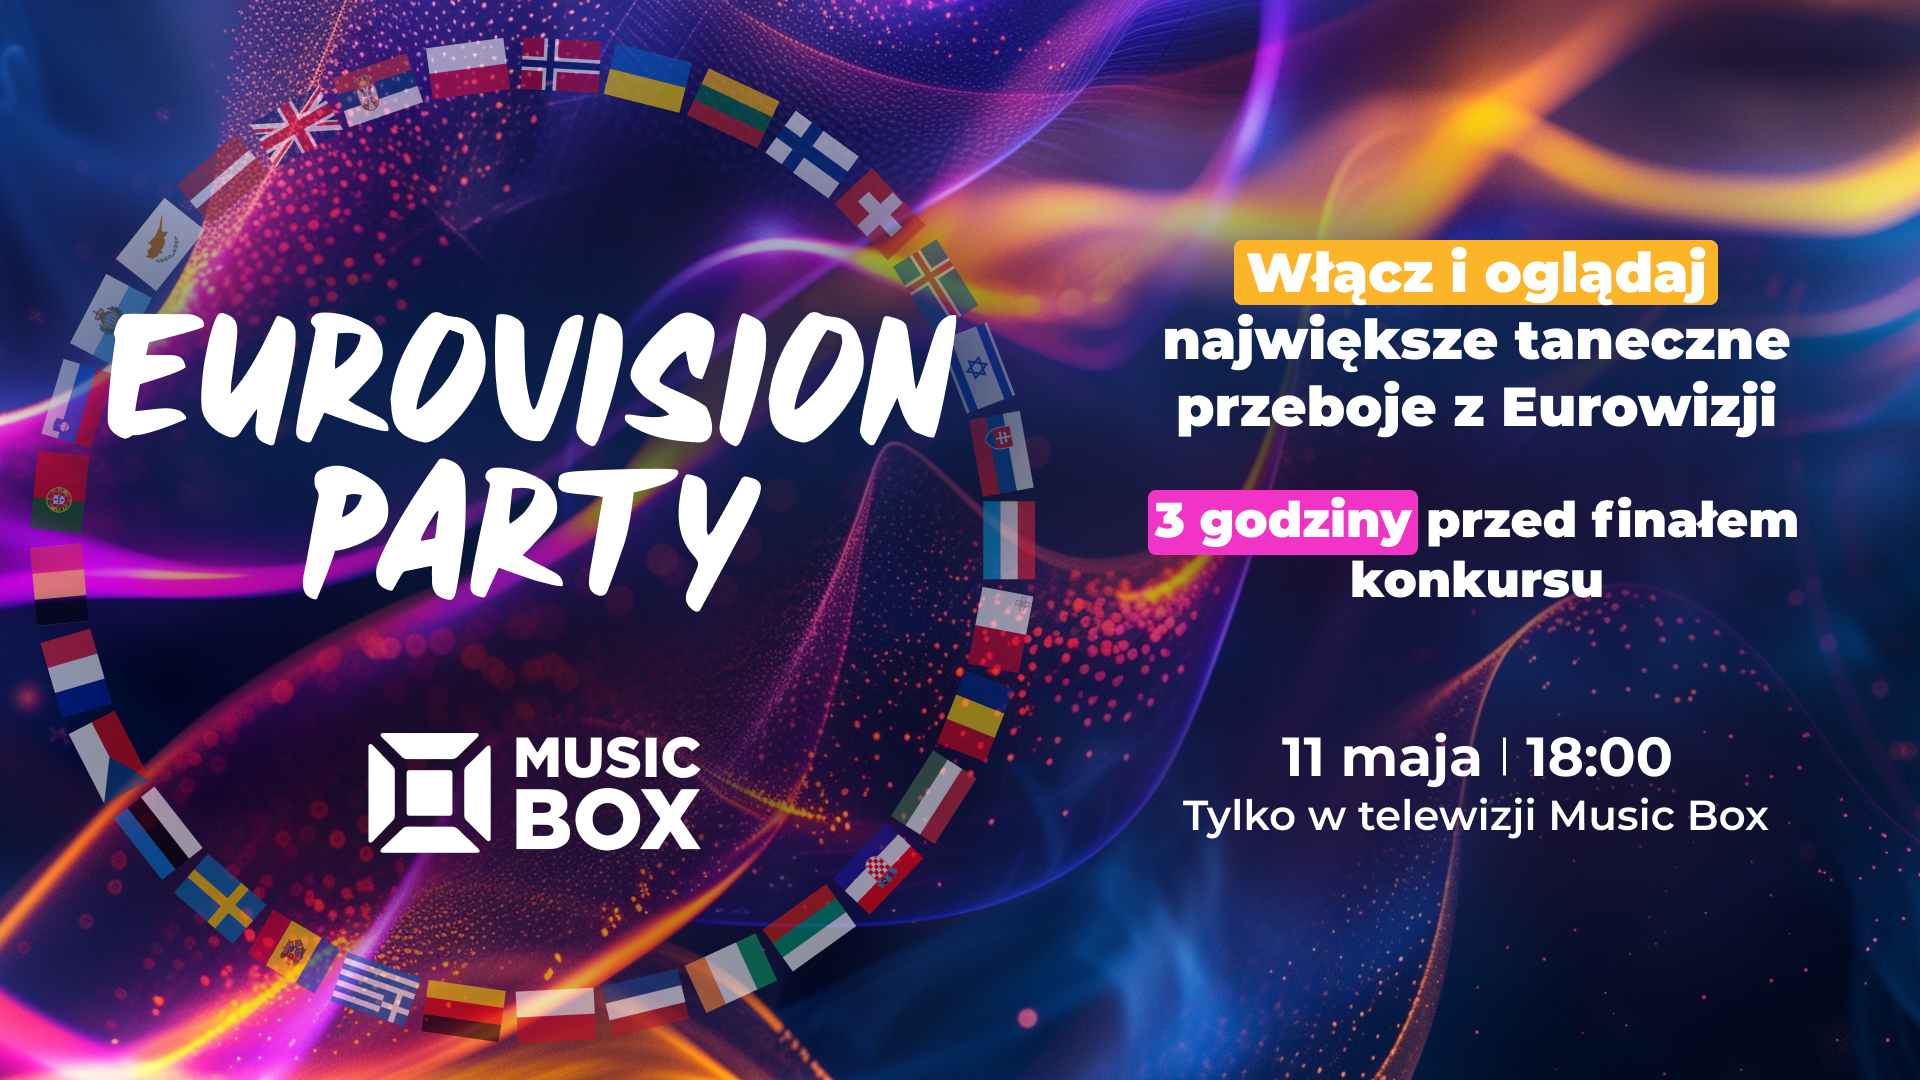 Eurovision Party, program w telewizji Music Box